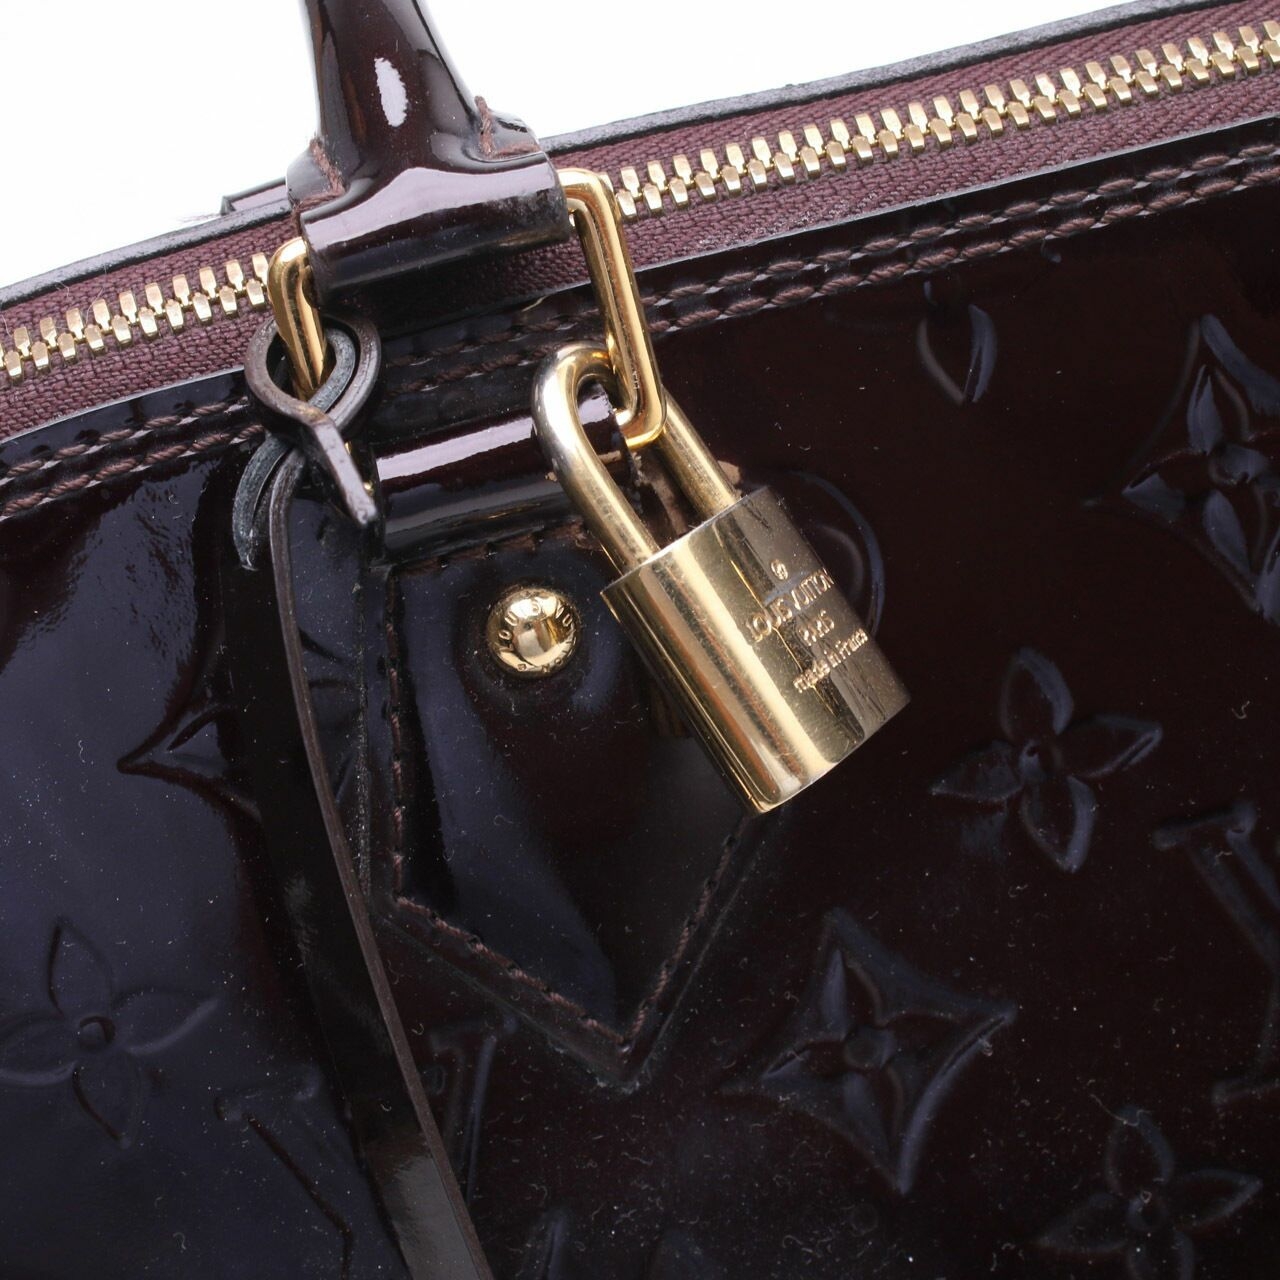 Louis Vuitton Alma GM Vernis Black Hand Bag